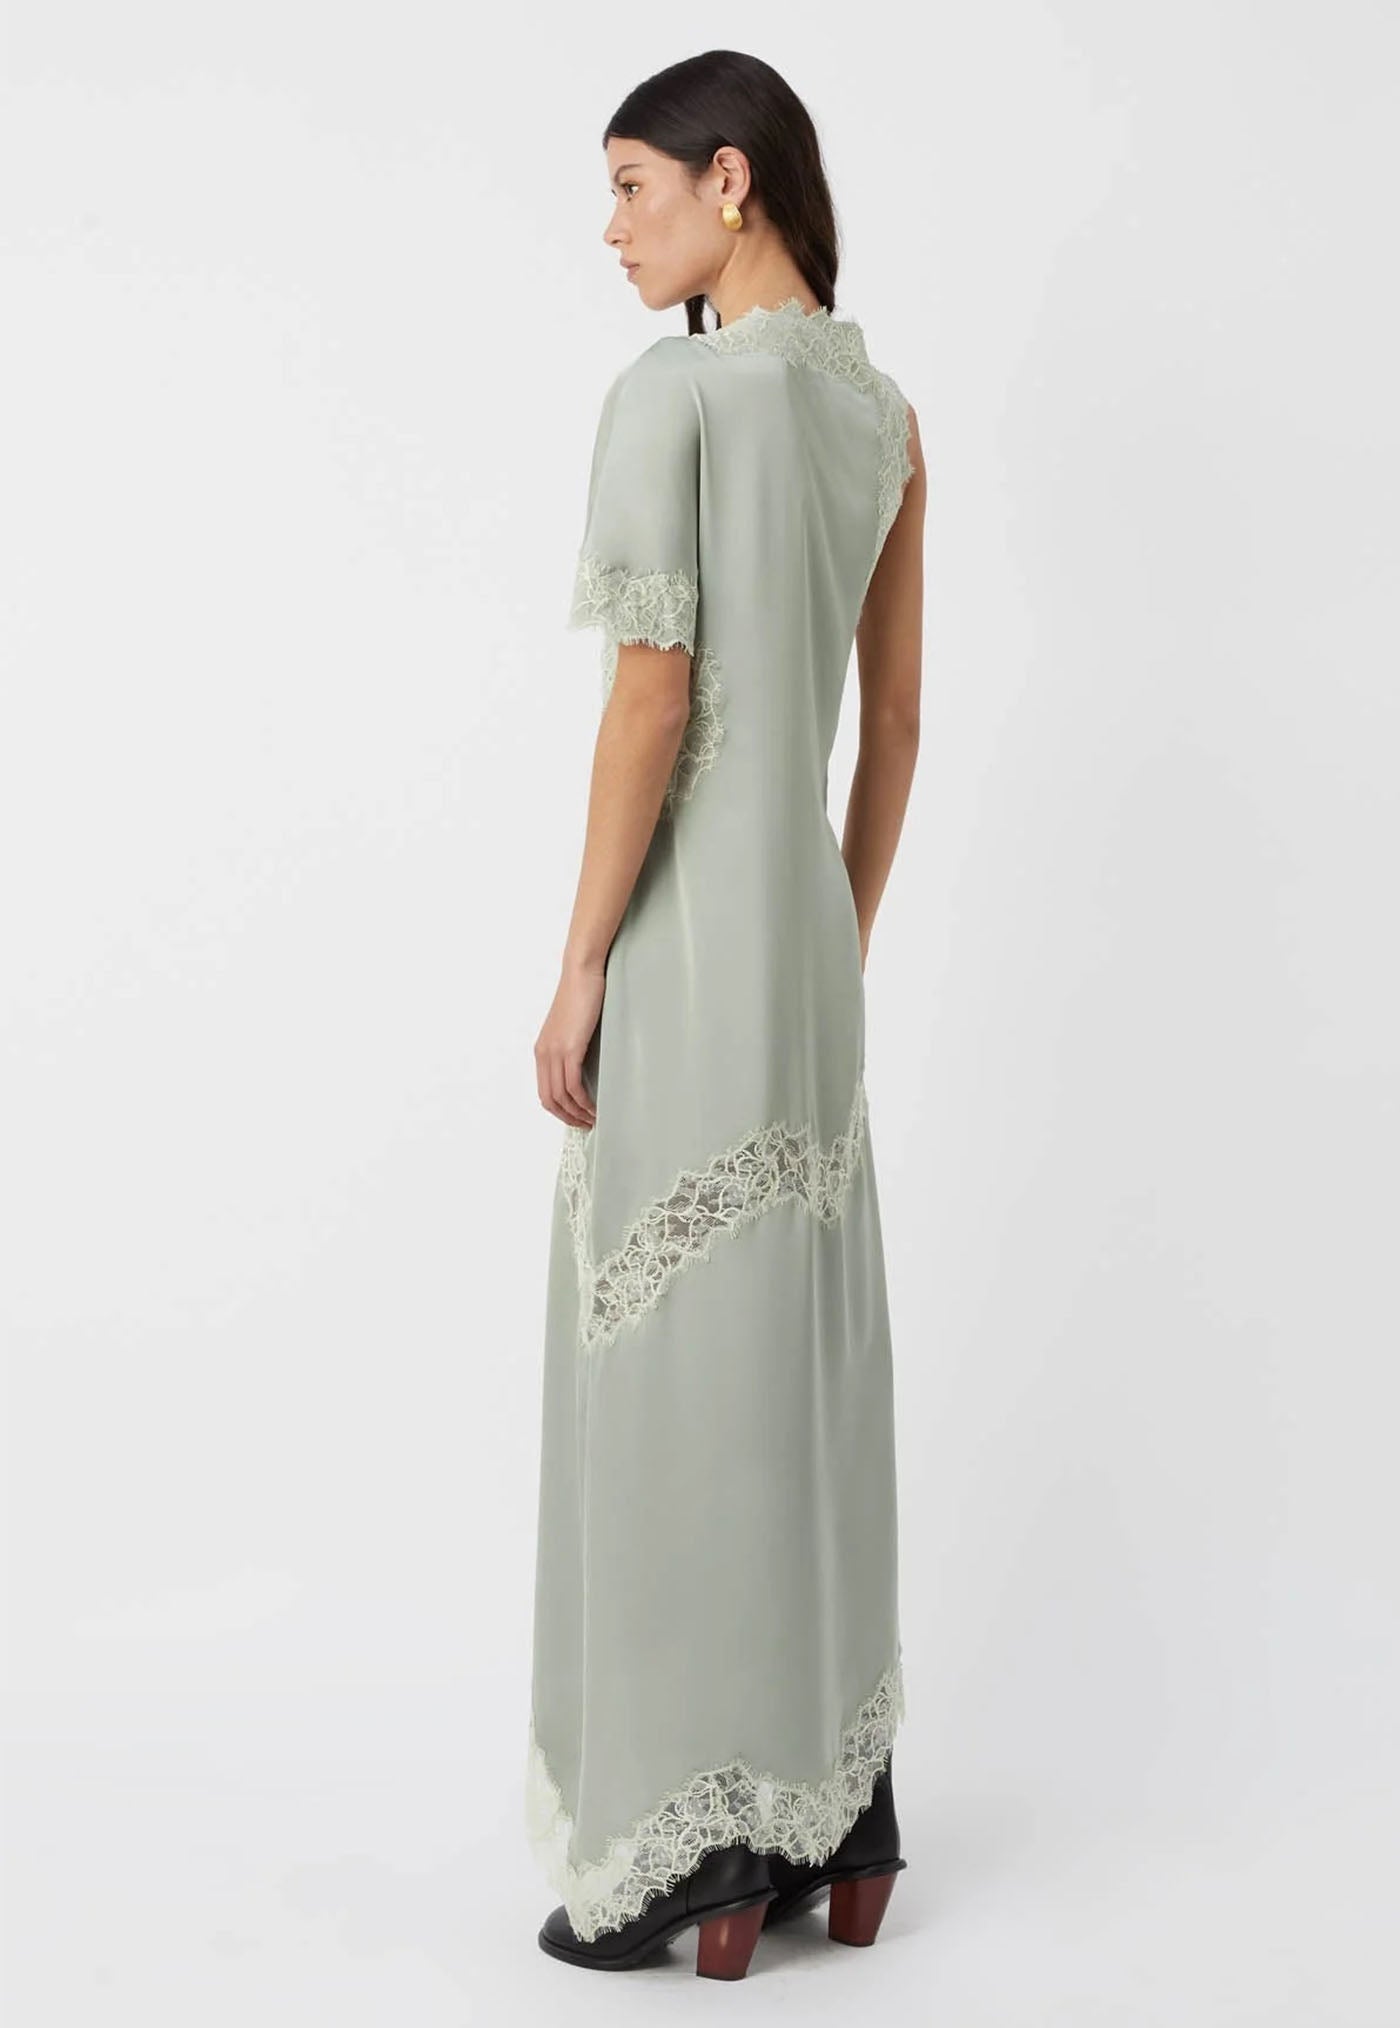 Melle Dress - Mint sold by Angel Divine